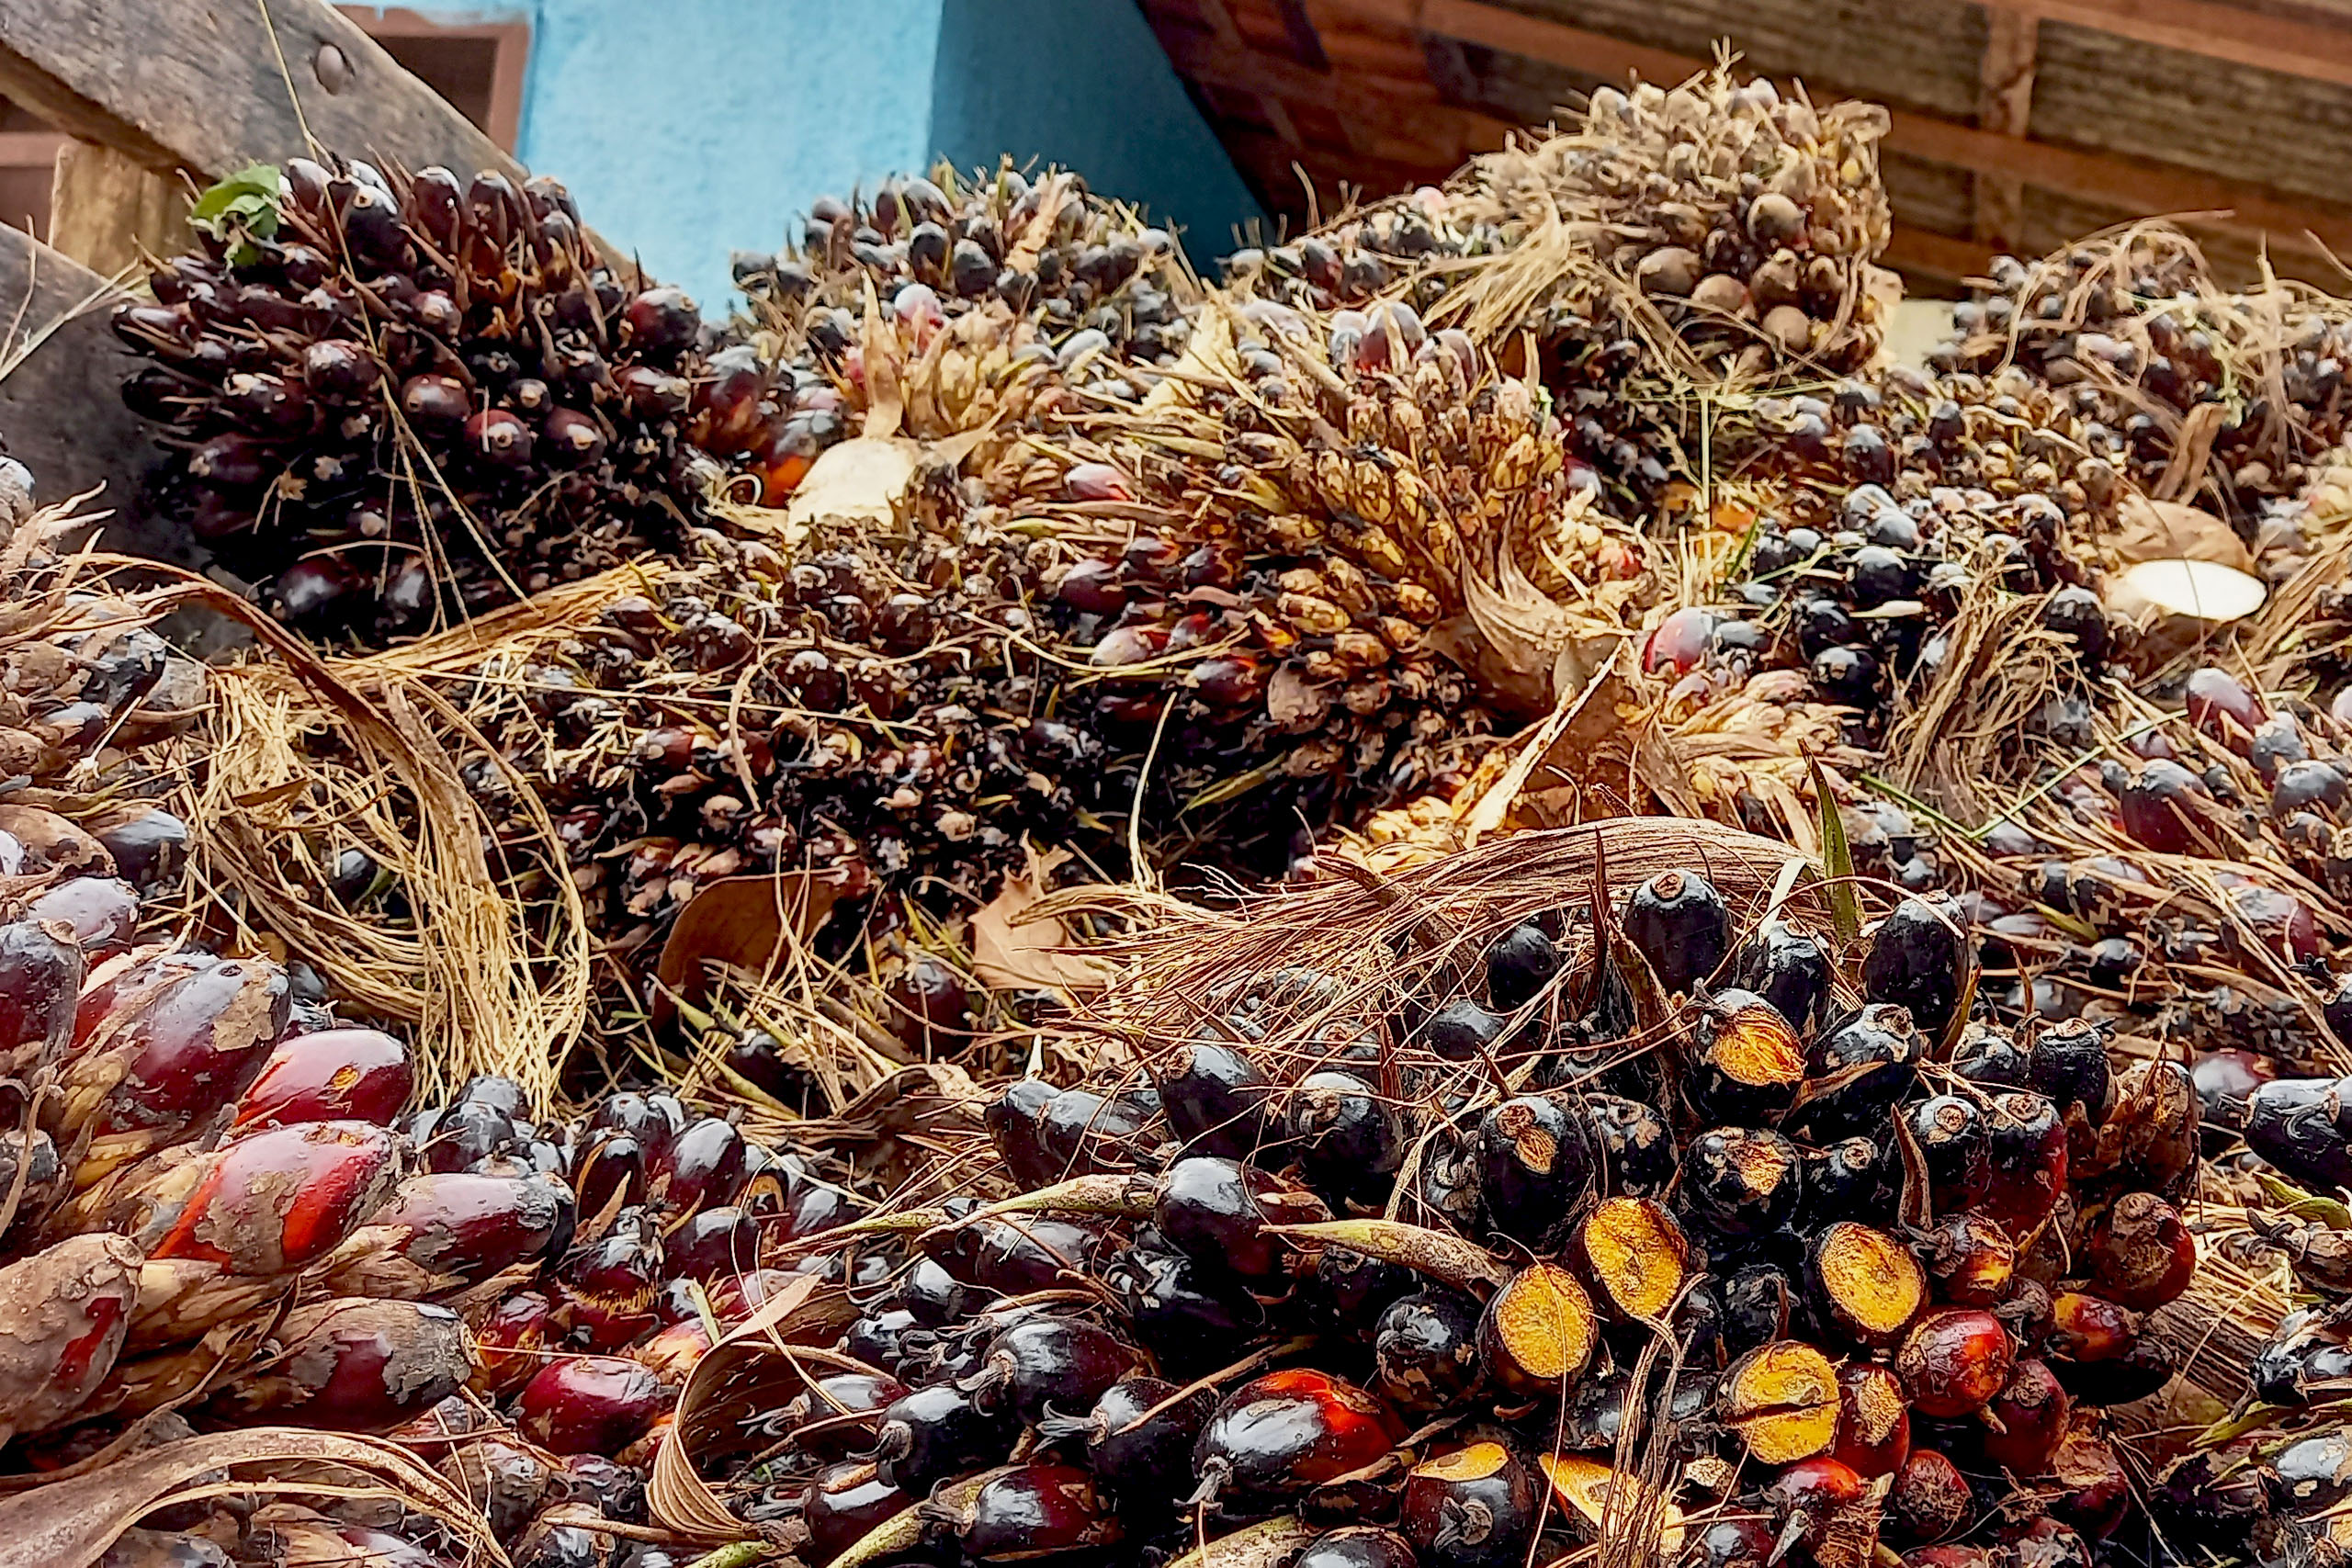 Oil palm harvested